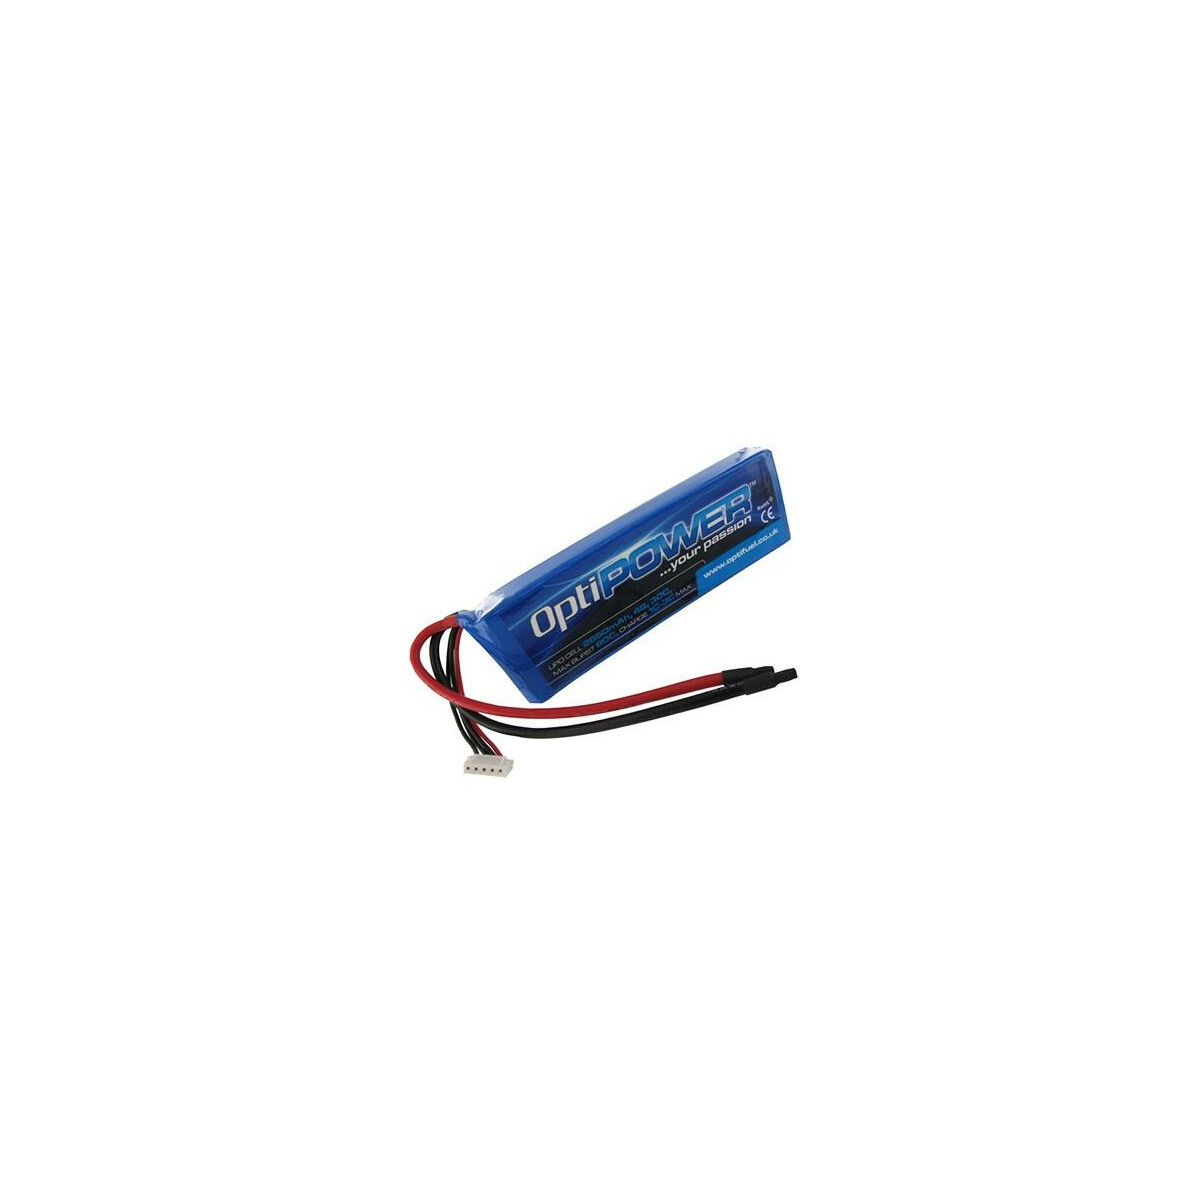 OptiPower Lipo Cell Battery 4000mAh 4S 30C